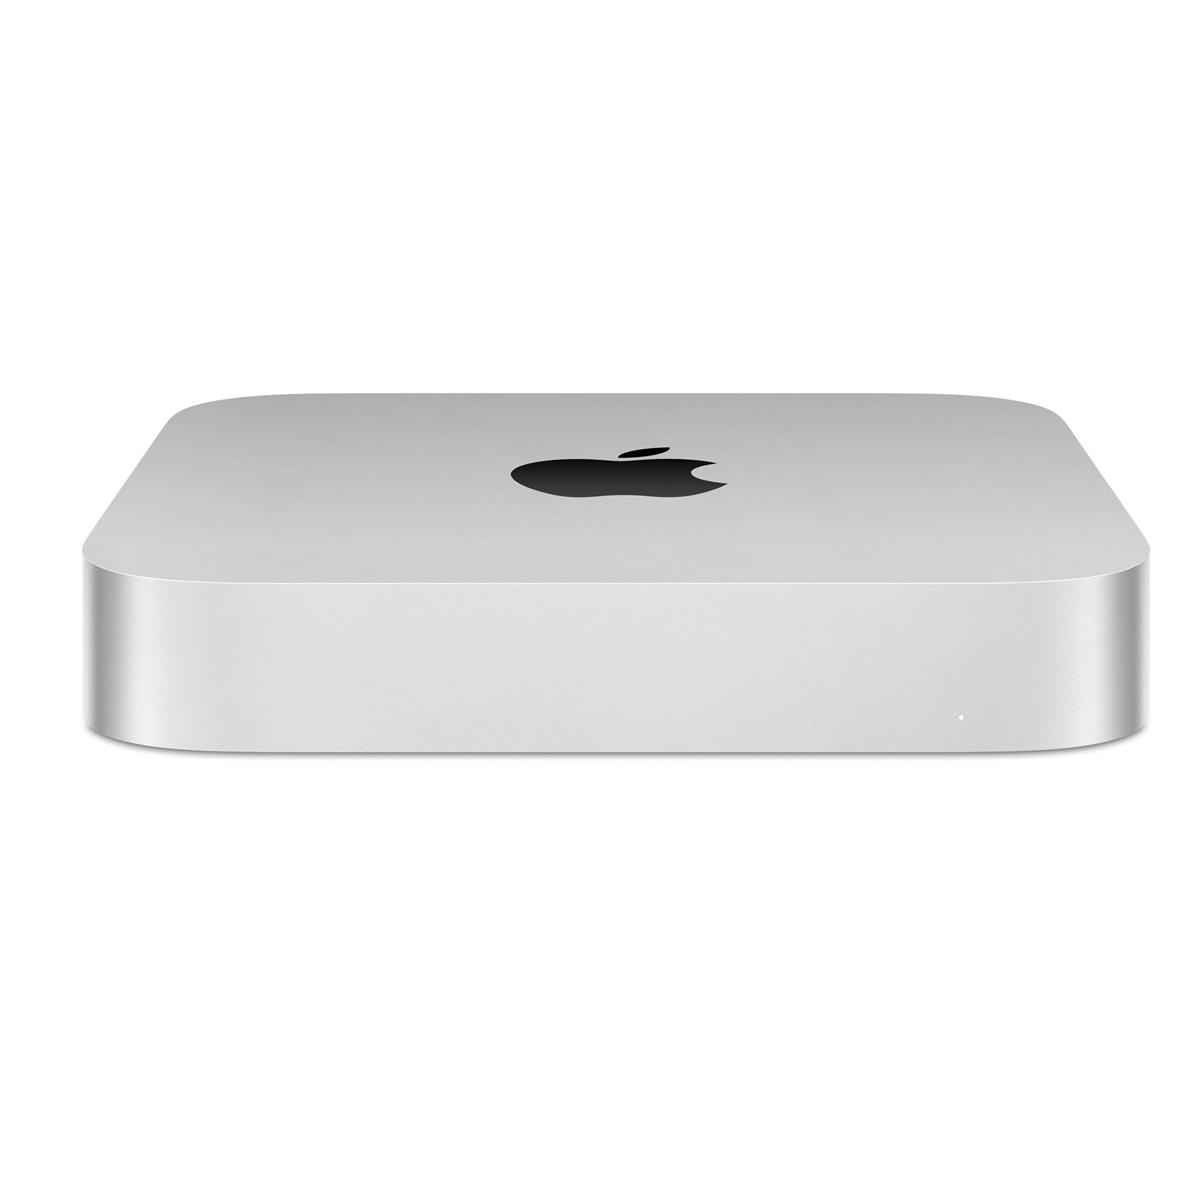 Image of Apple Mac Mini Desktop